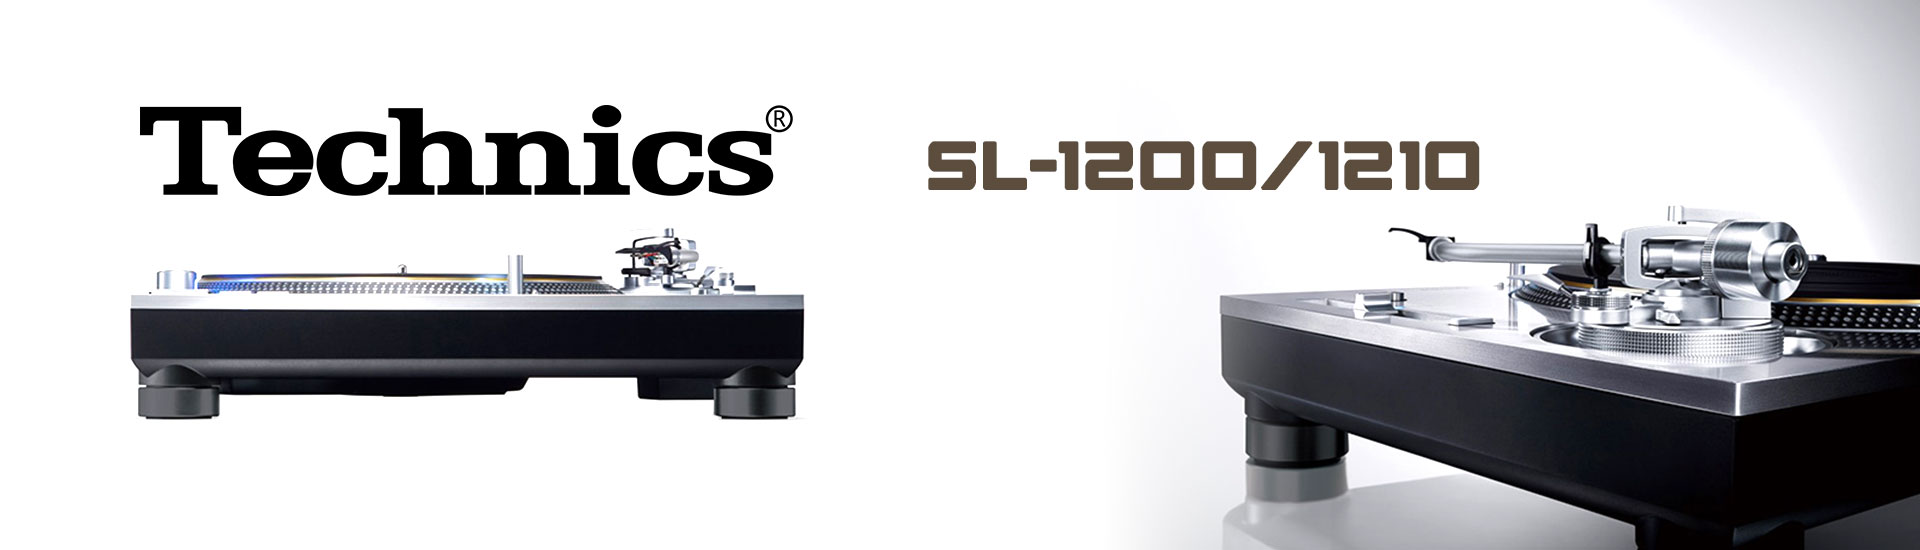 Technics SL1200/1210GR